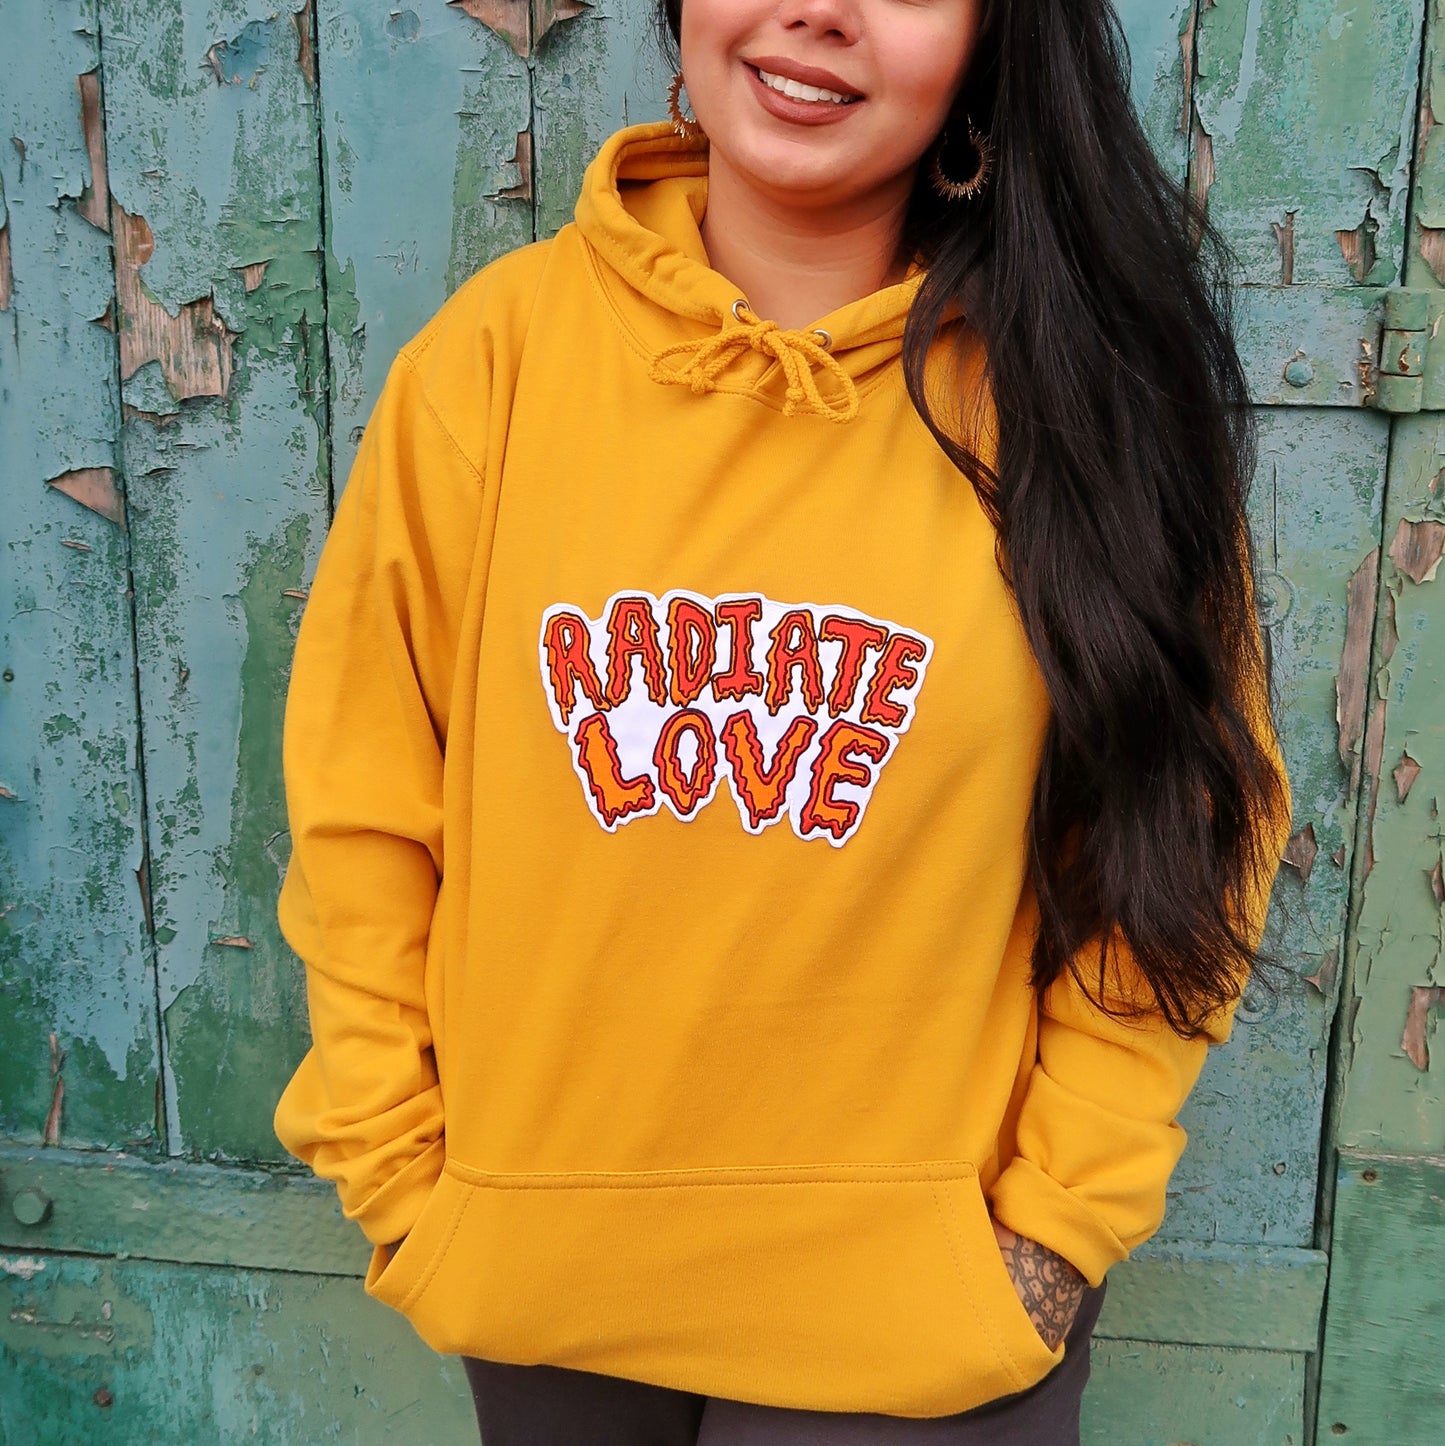 radiate love embroidered hoodie - mustard yellow